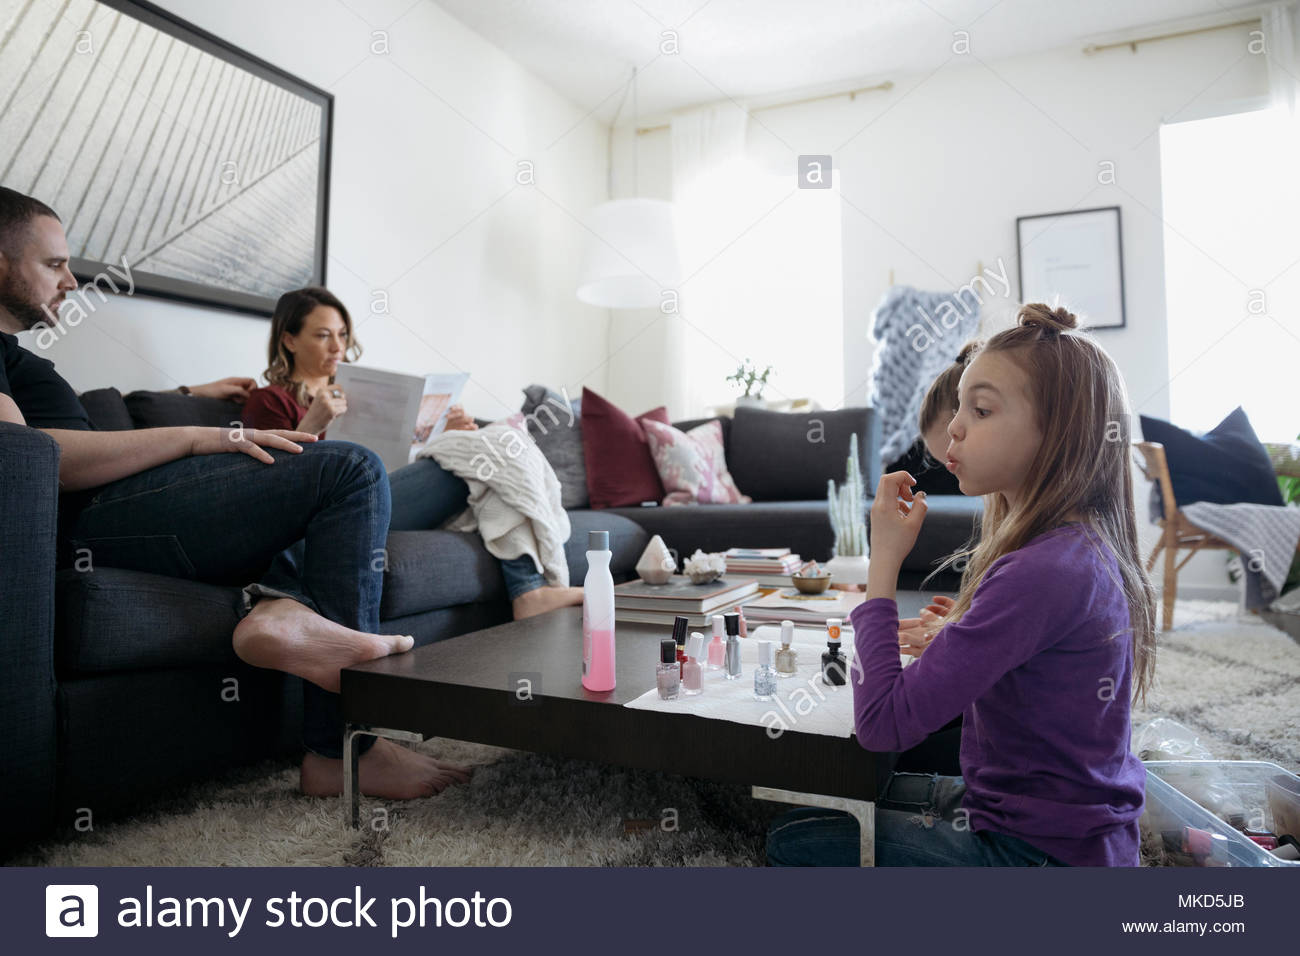 Girl painting fingernails with fingernail polish in living room Stock Photo